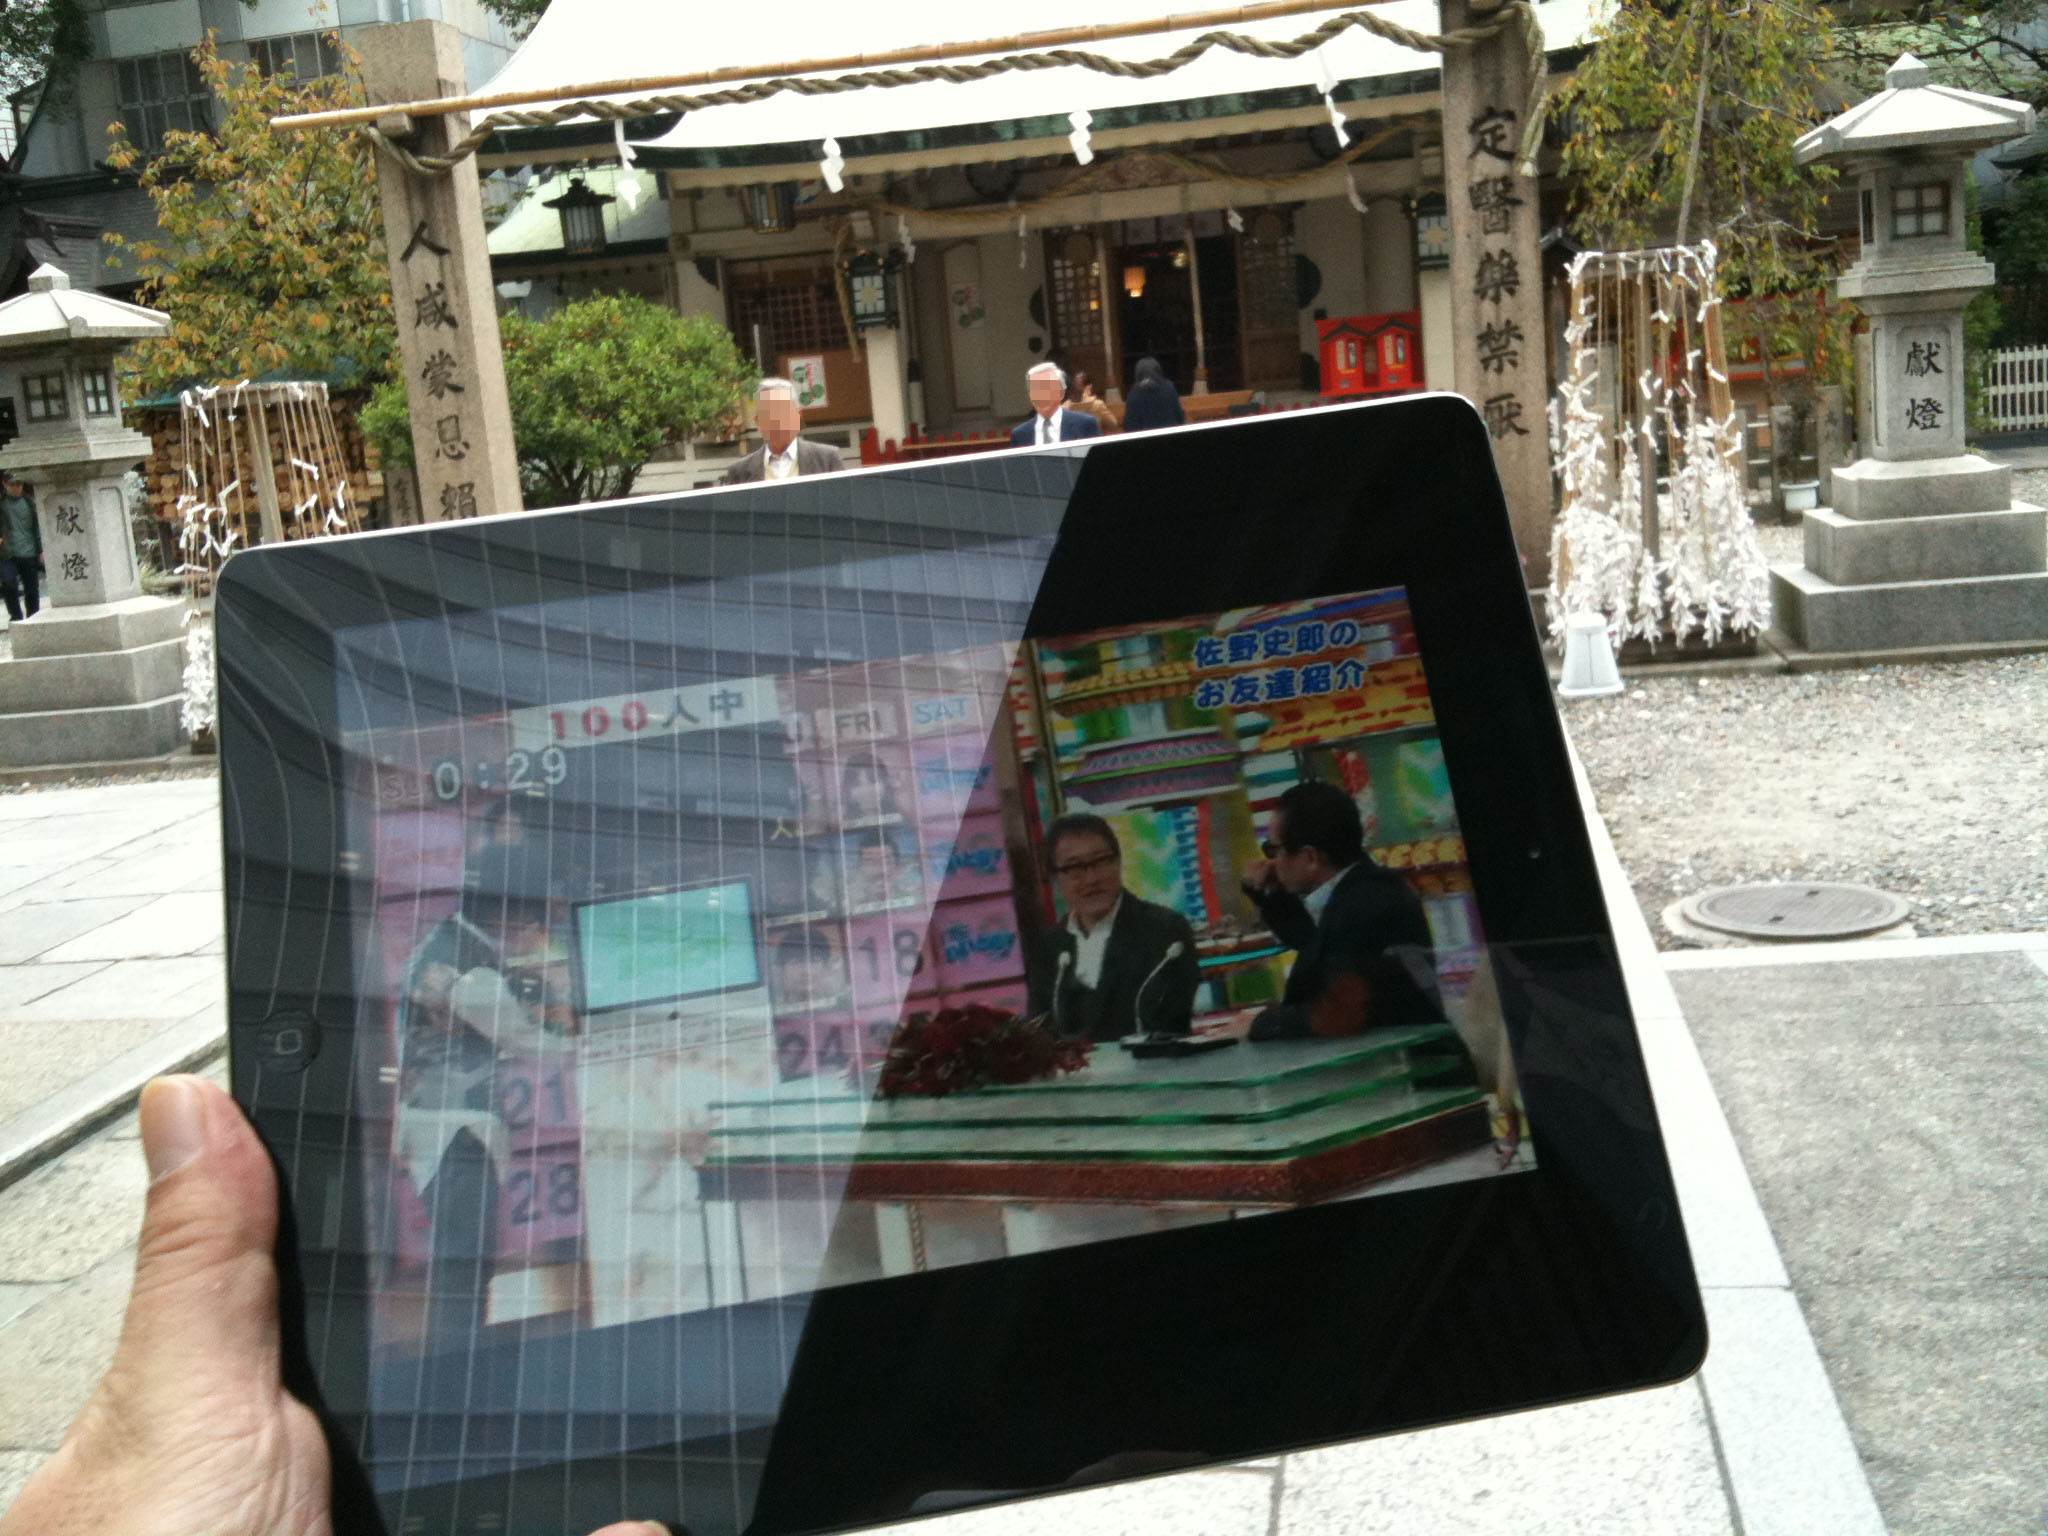 中村さん【視聴場所】大阪市内<br />【視聴端末】iPad2, iPhone